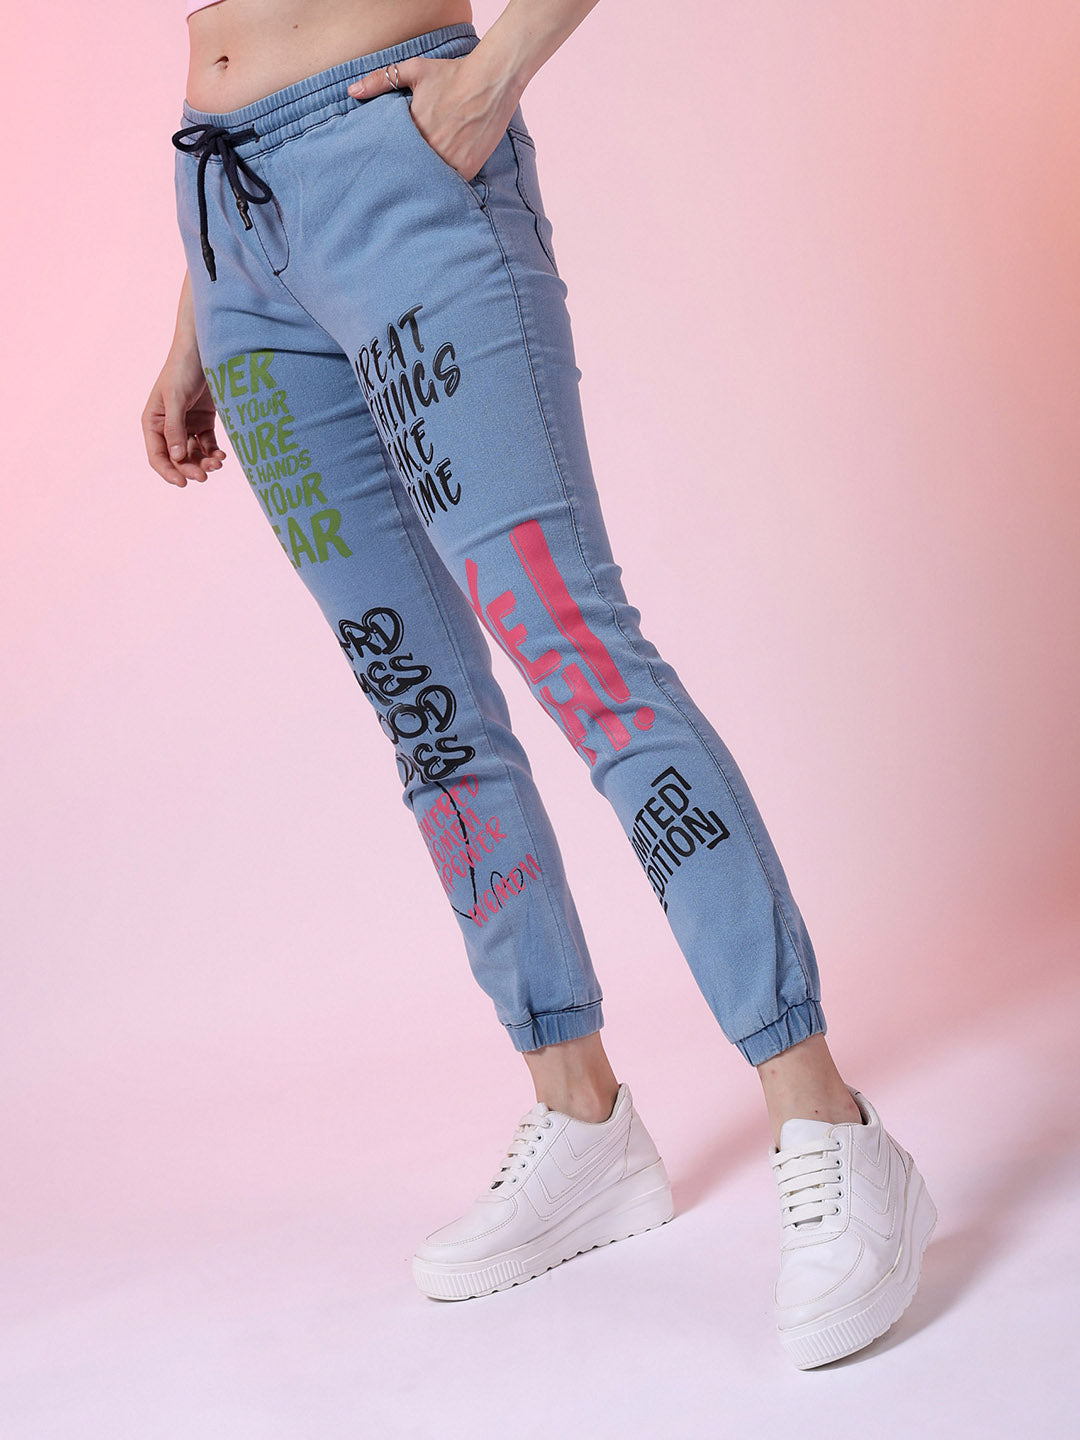 Shop Women Regular Fit Jeans Online.